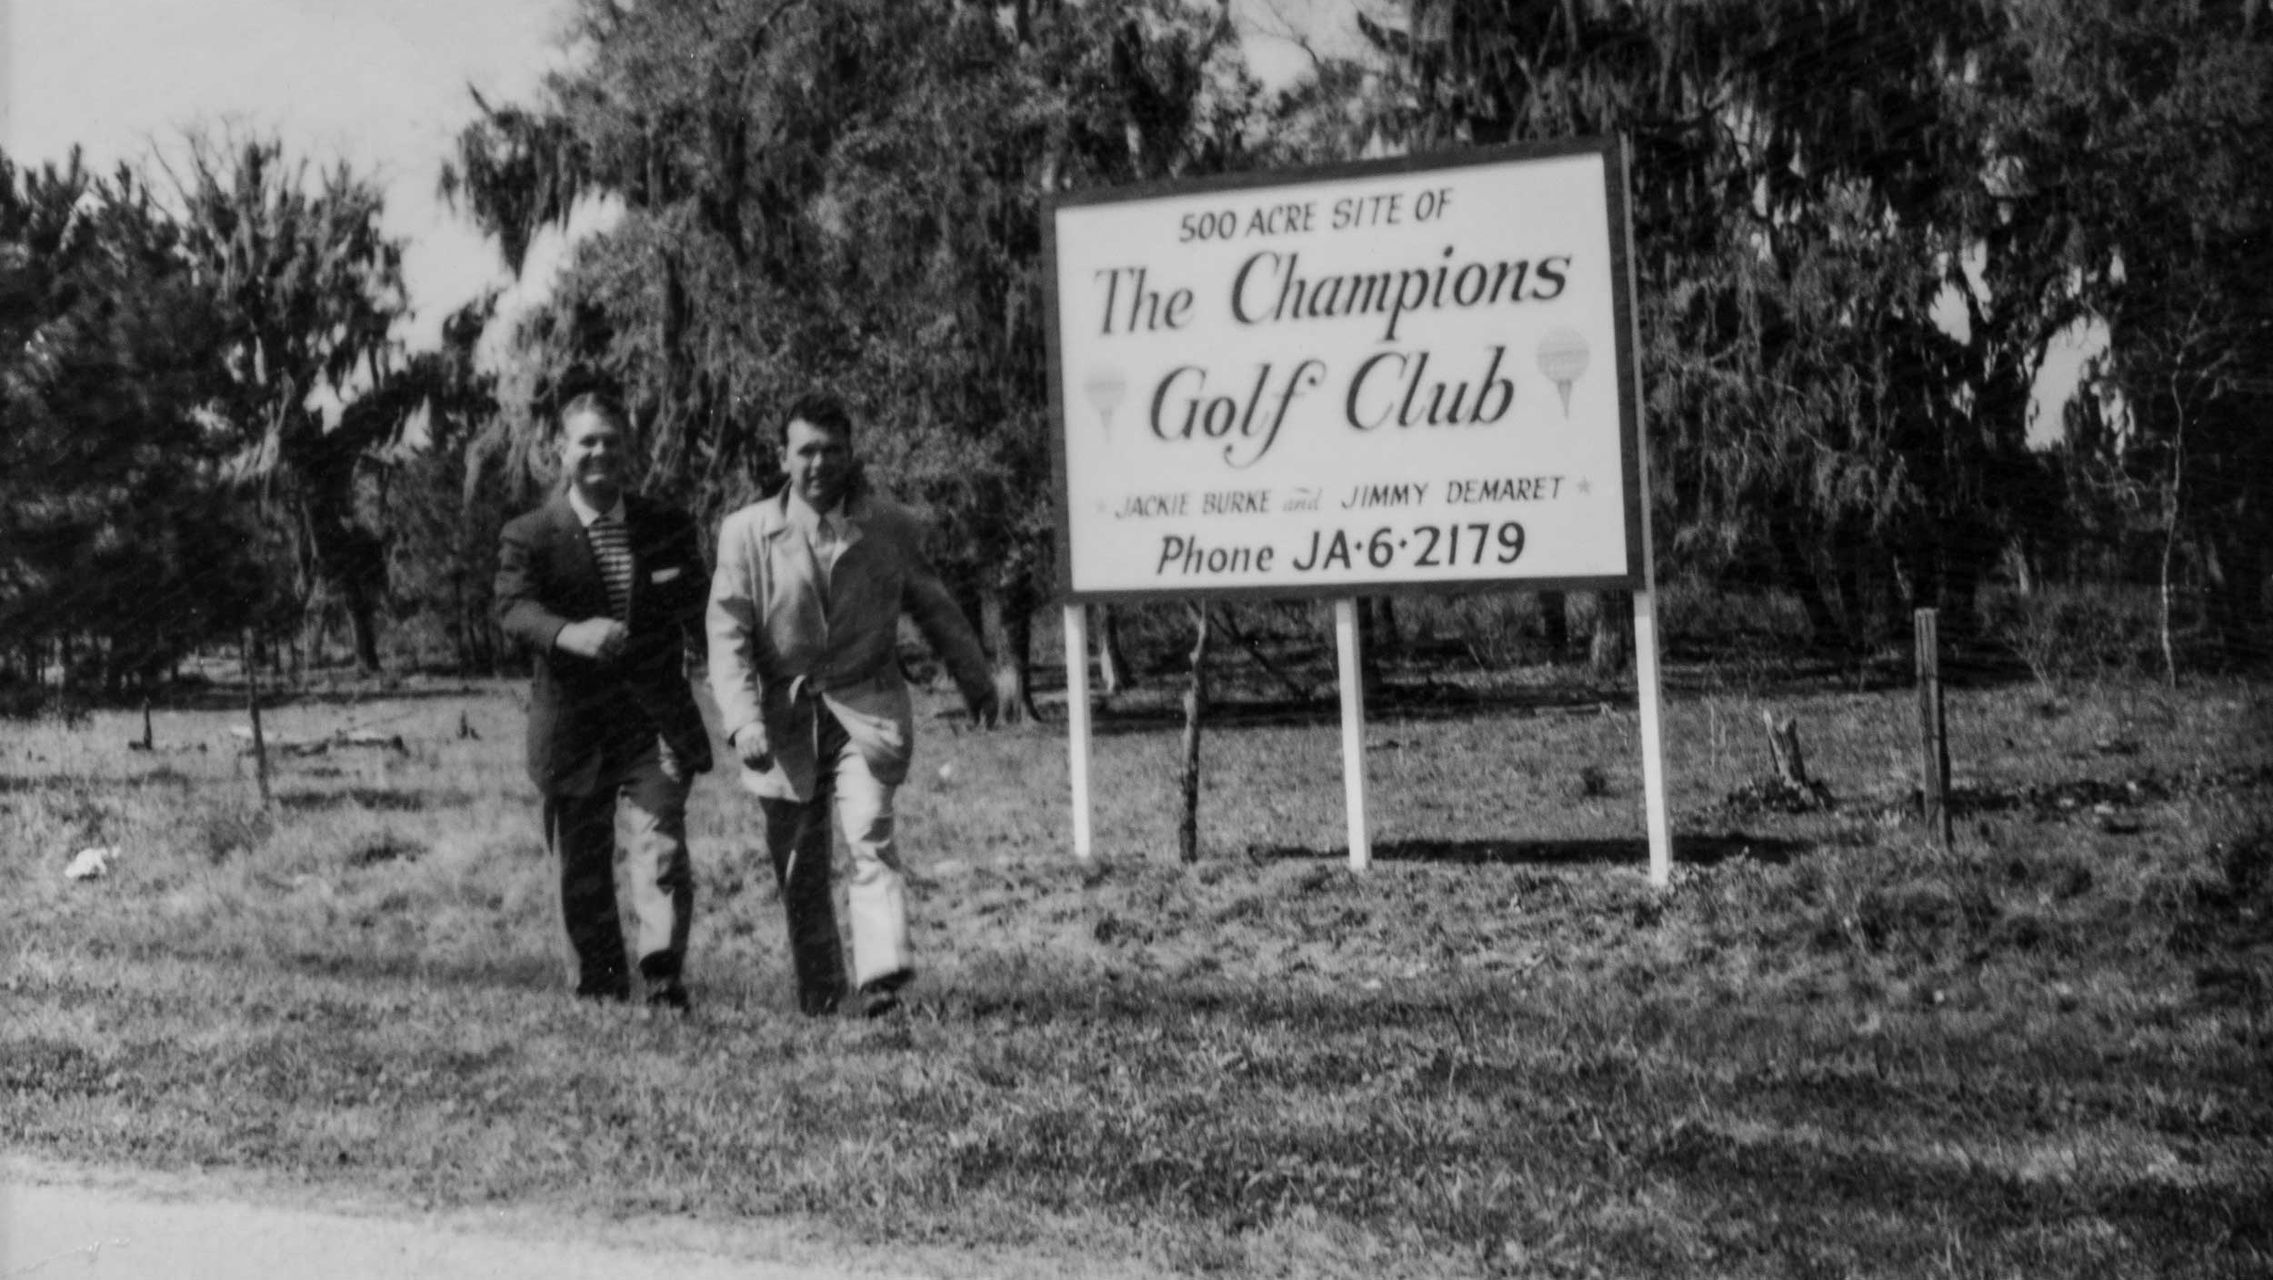 Champions Golf Club